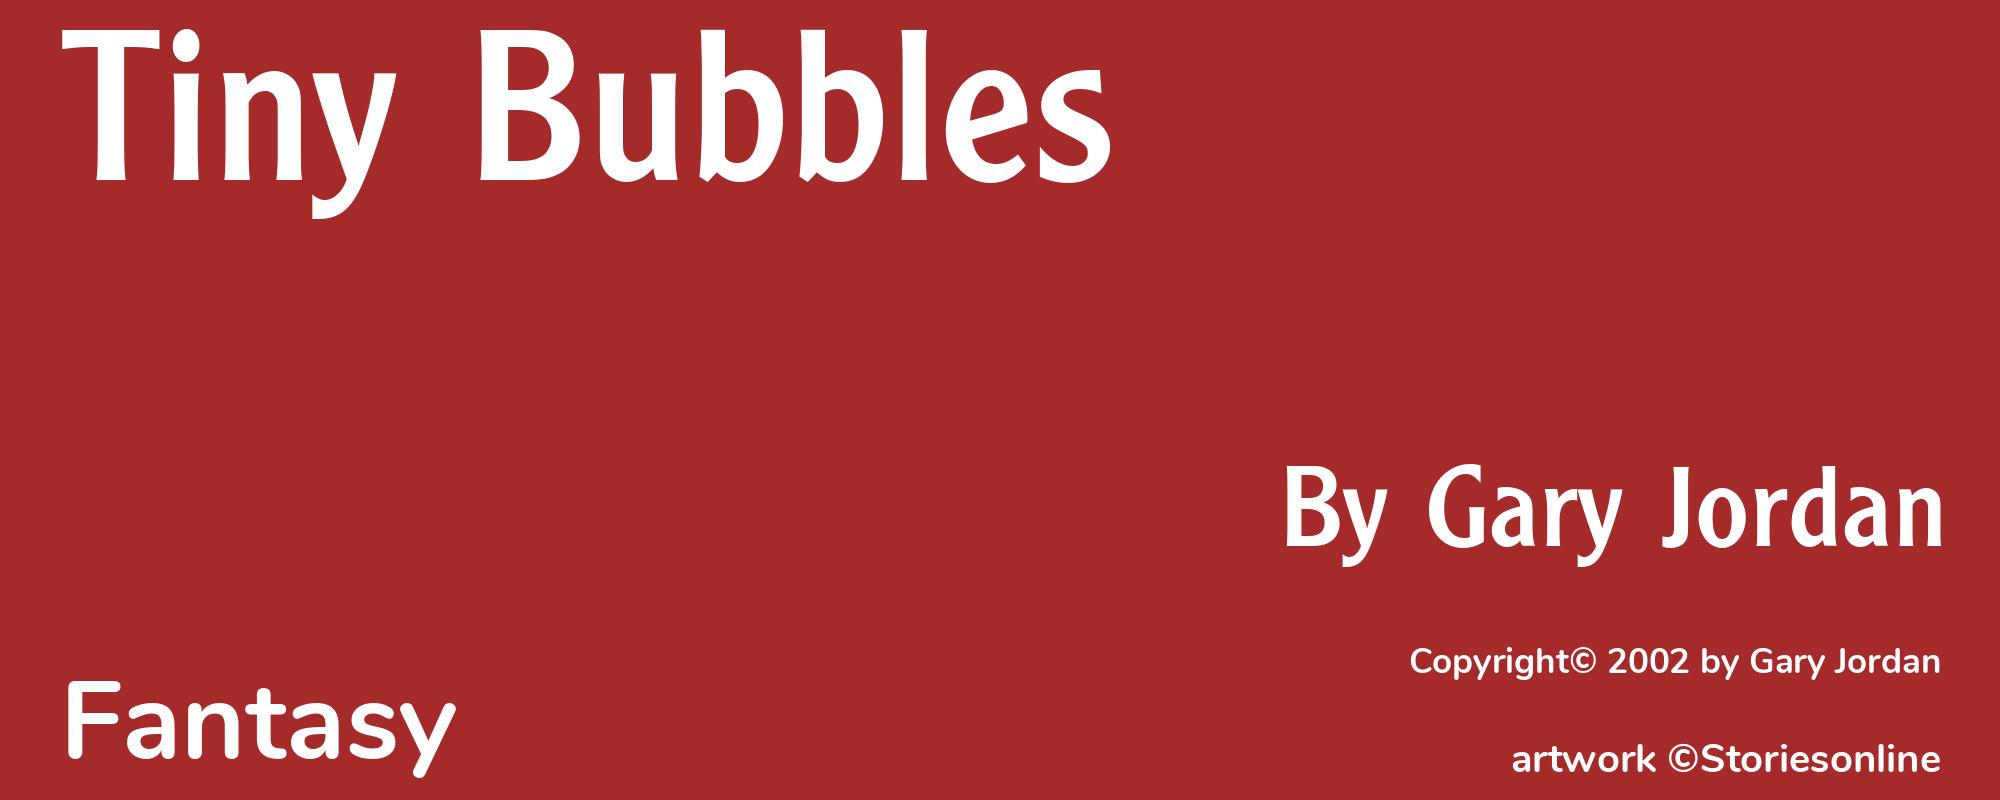 Tiny Bubbles - Cover